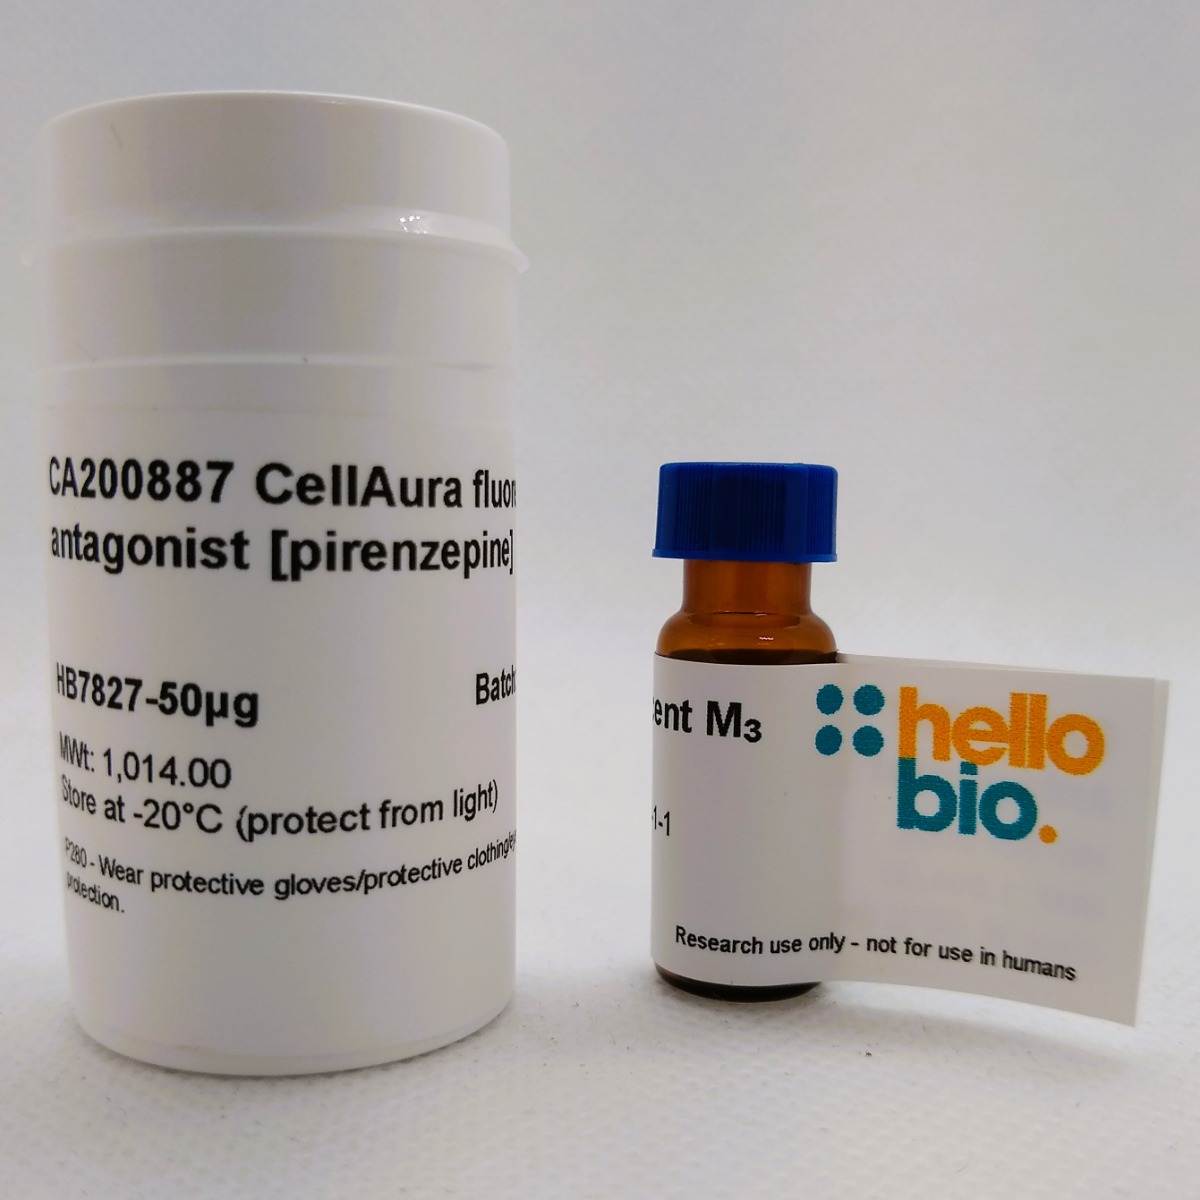 CellAura fluorescent M3 antagonist [pirenzepine] product vial image | Hello Bio